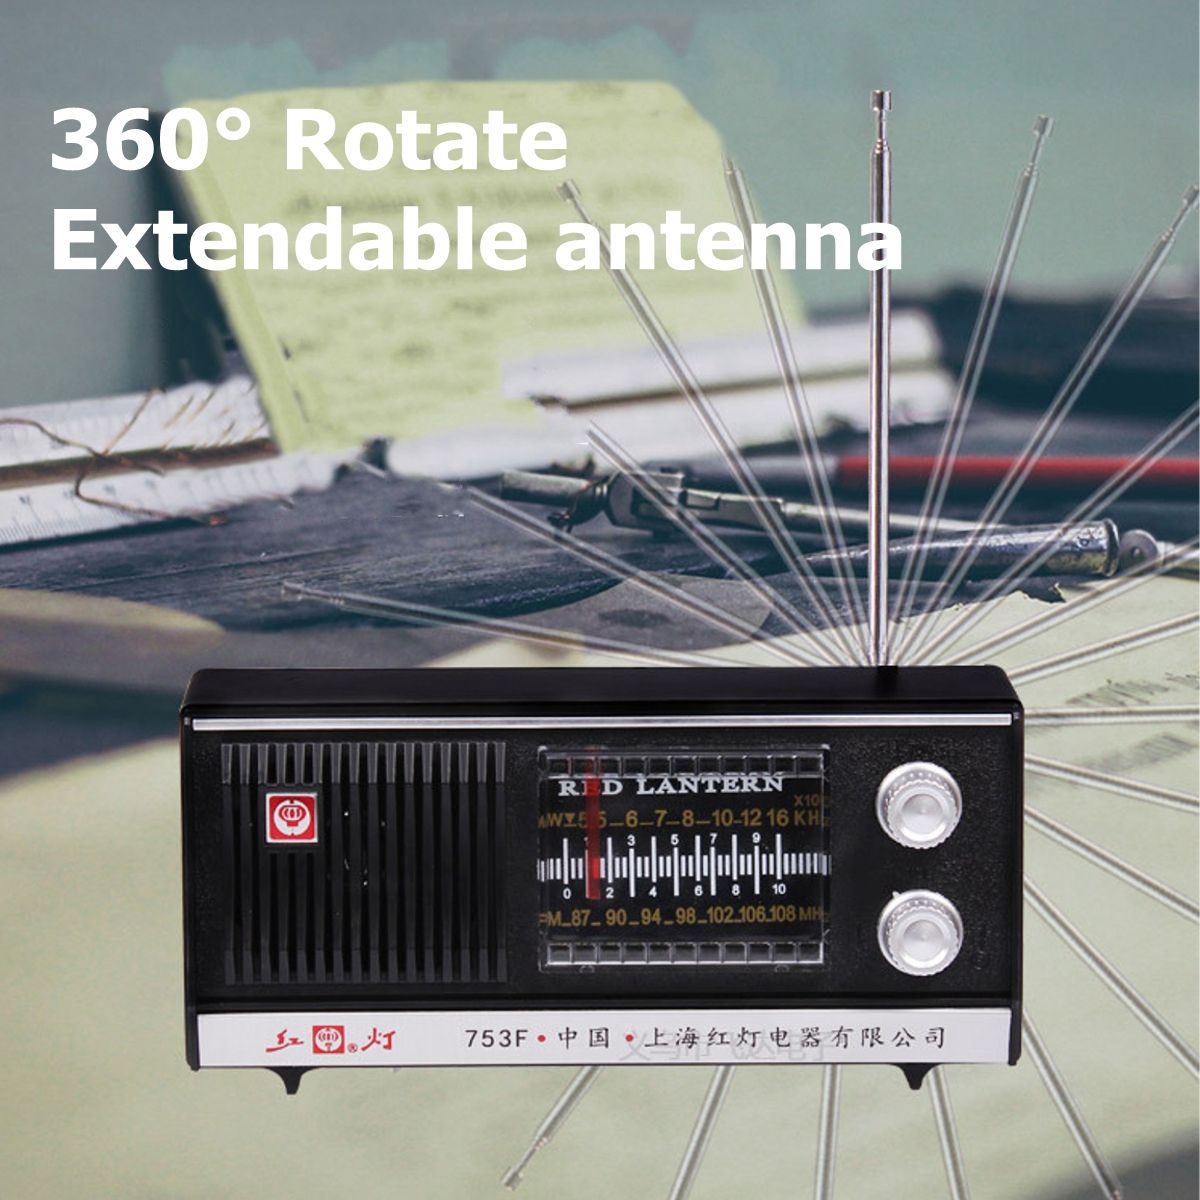 Portable-Vintage-Retro-Radio-FM-MW-Stereo-Speaker-with-Earphone-Jack-Antenna-1582189